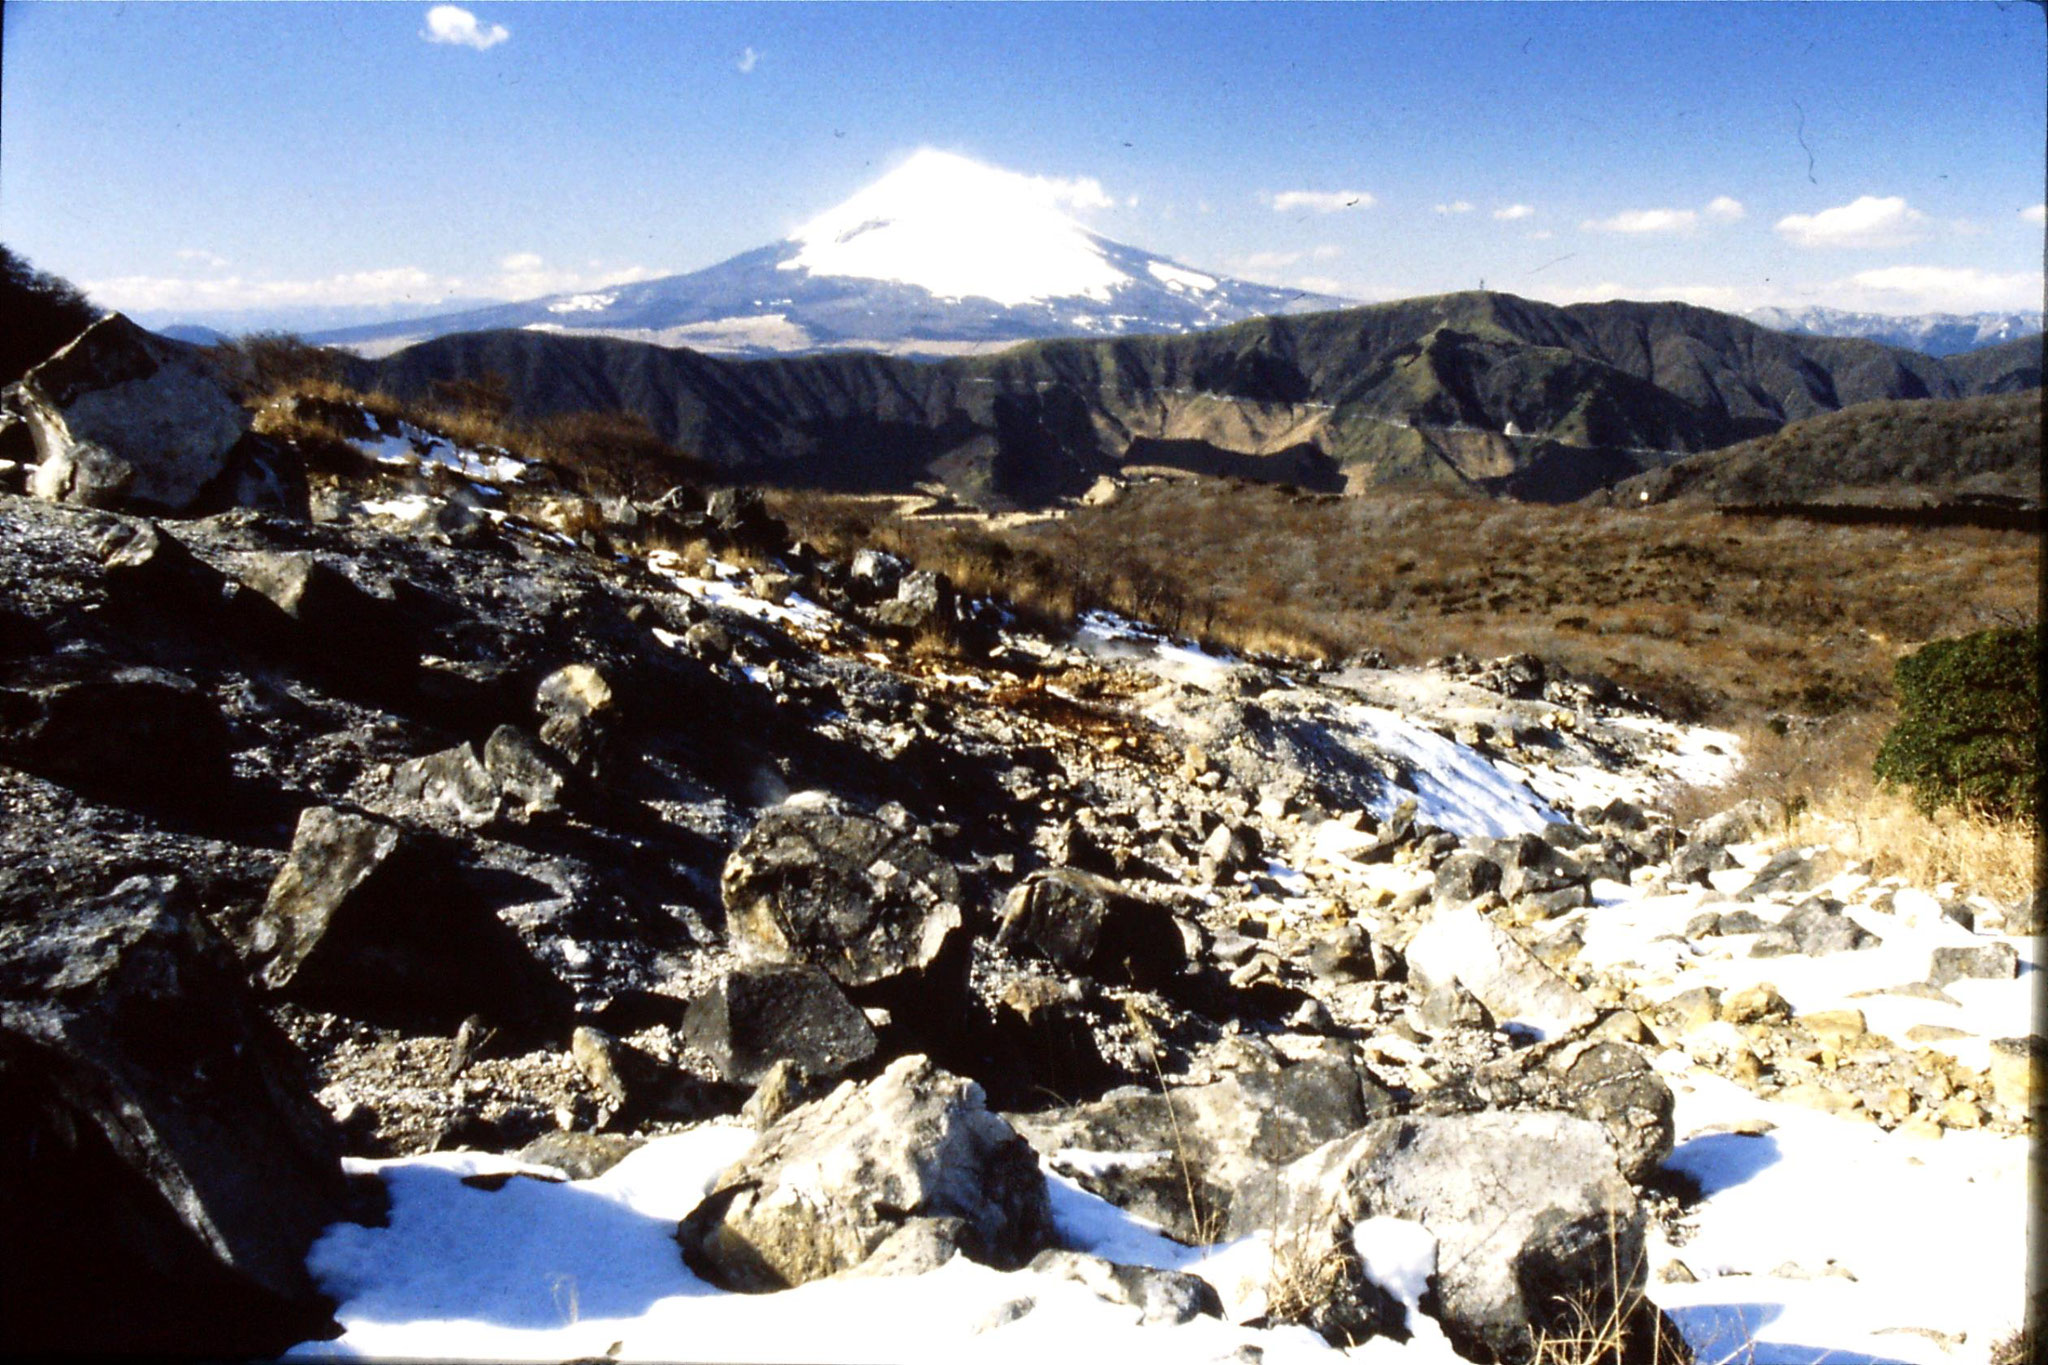 28/1/1989: 27: hotsprings and Mt Fuji